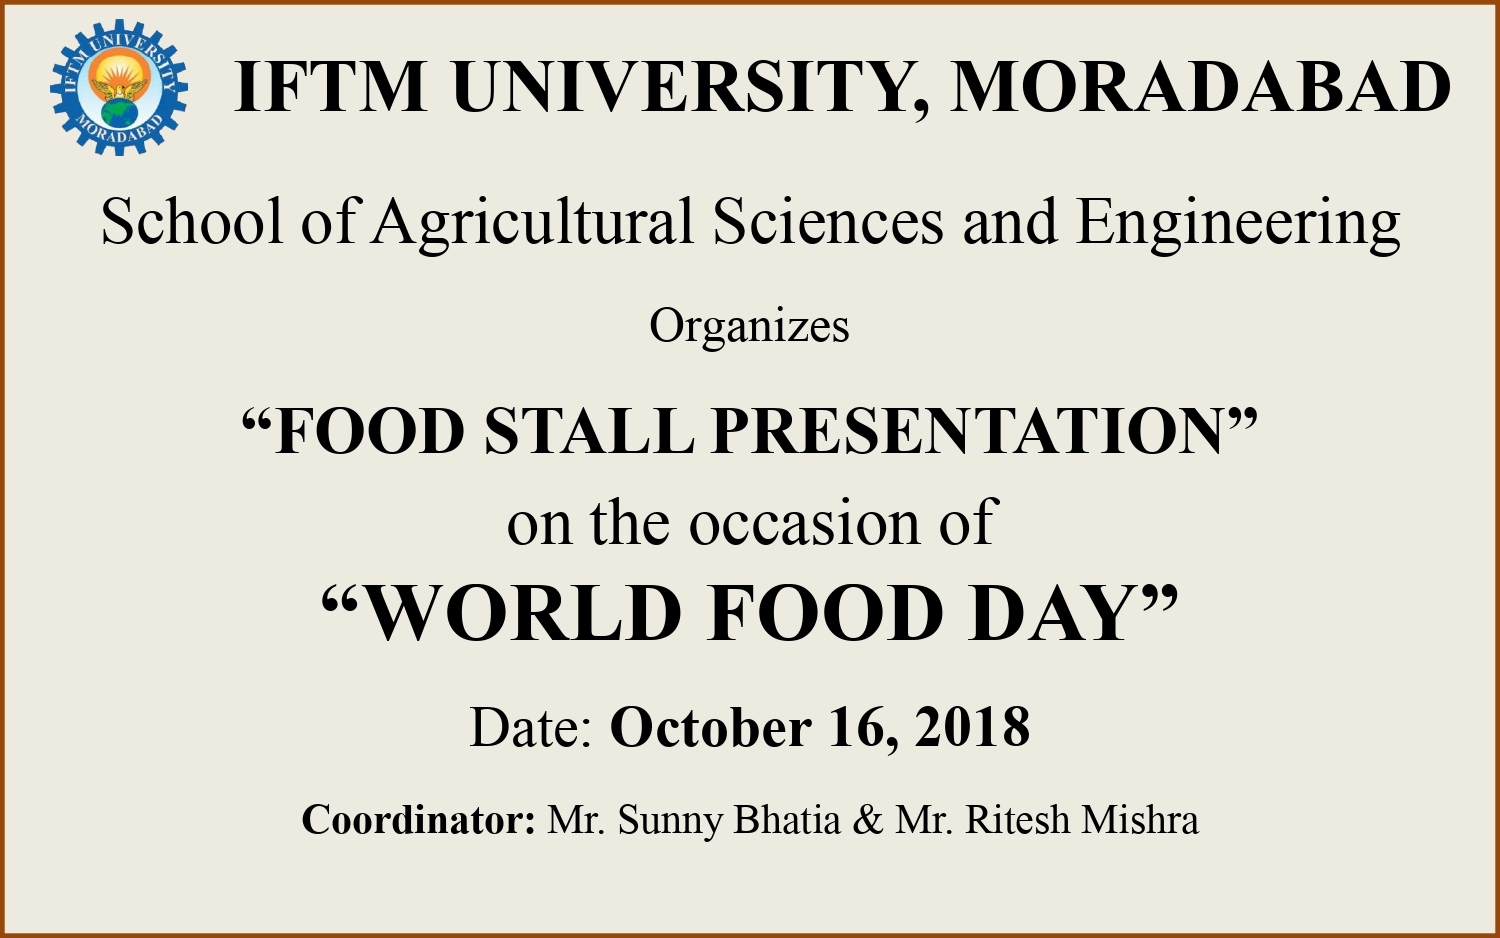 Food Stall Presentation on World Food Day